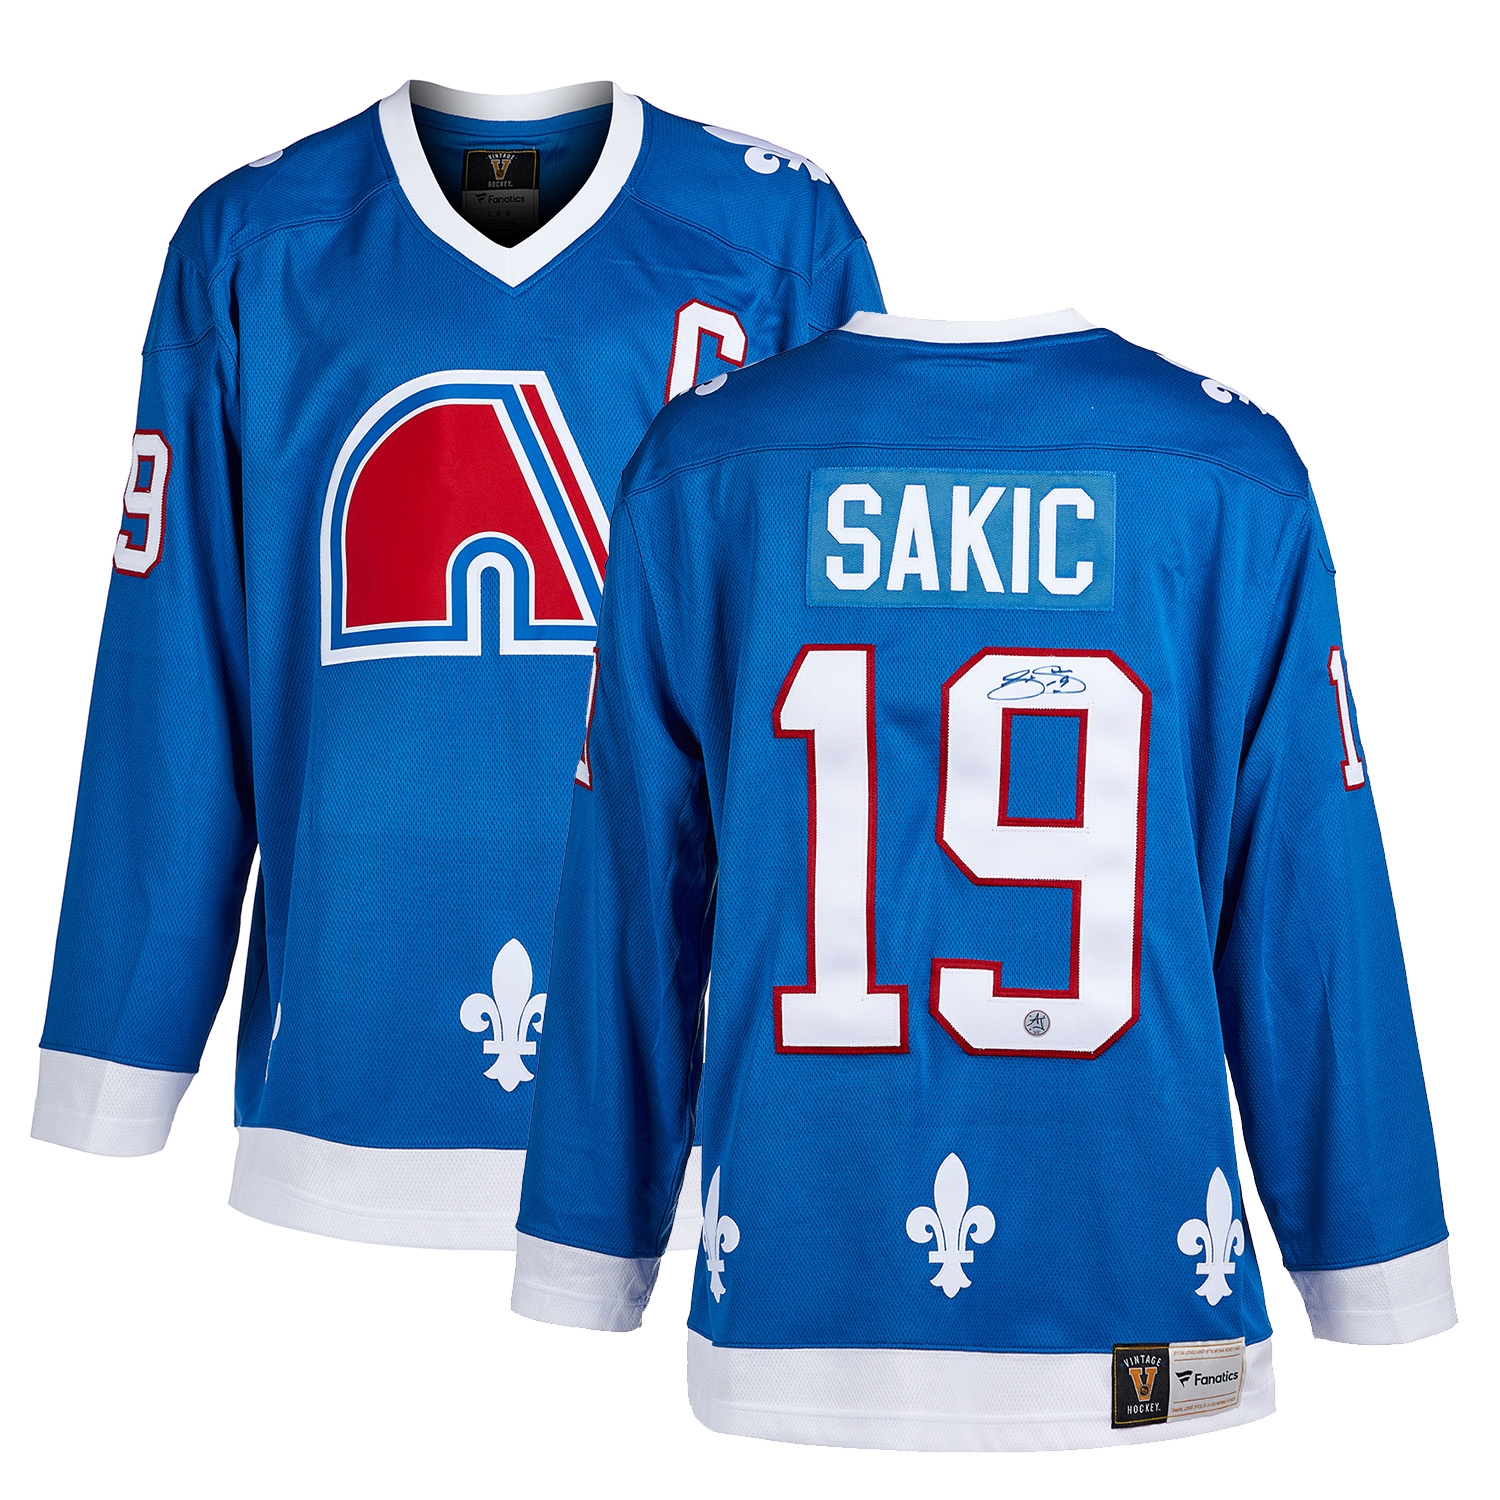 Joe Sakic Quebec Nordiques Signed Retro Fanatics Jersey